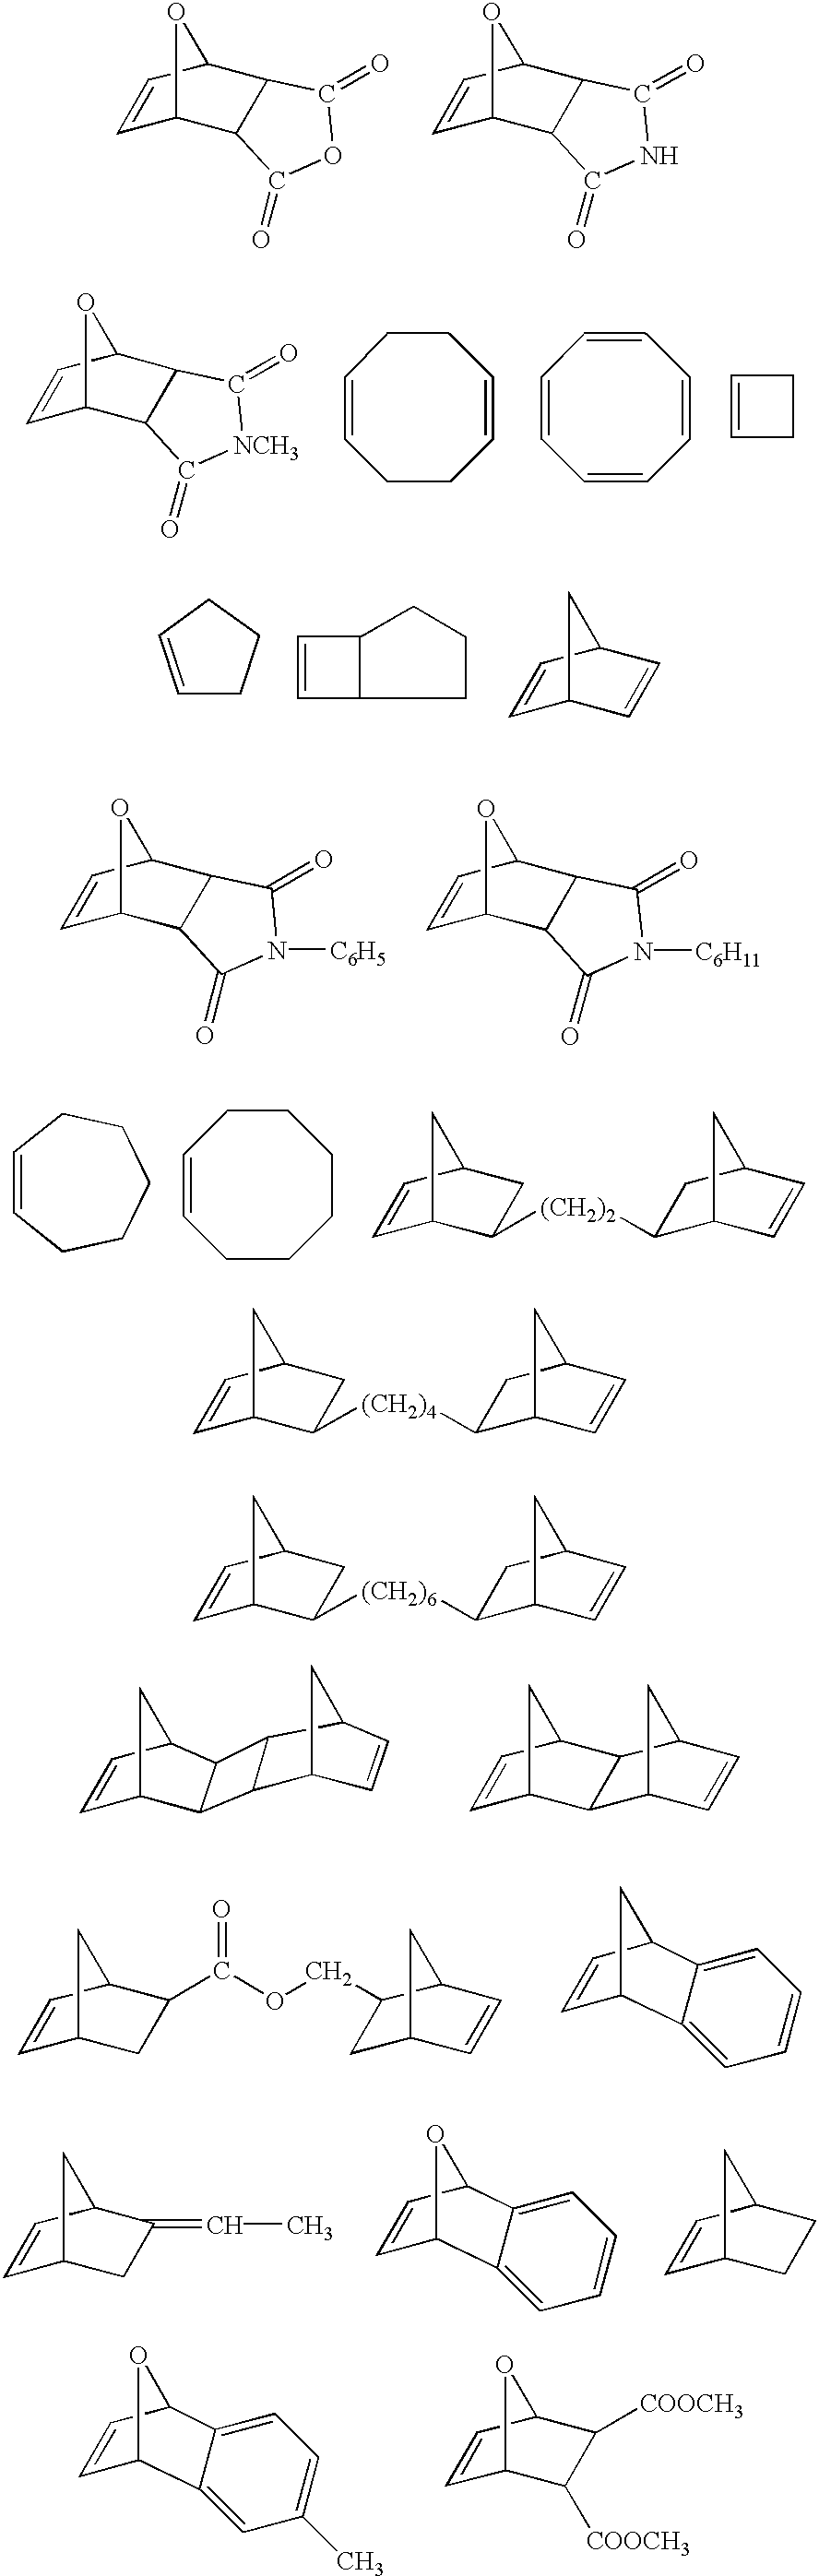 Metathesis polymerization adhesives and coatings